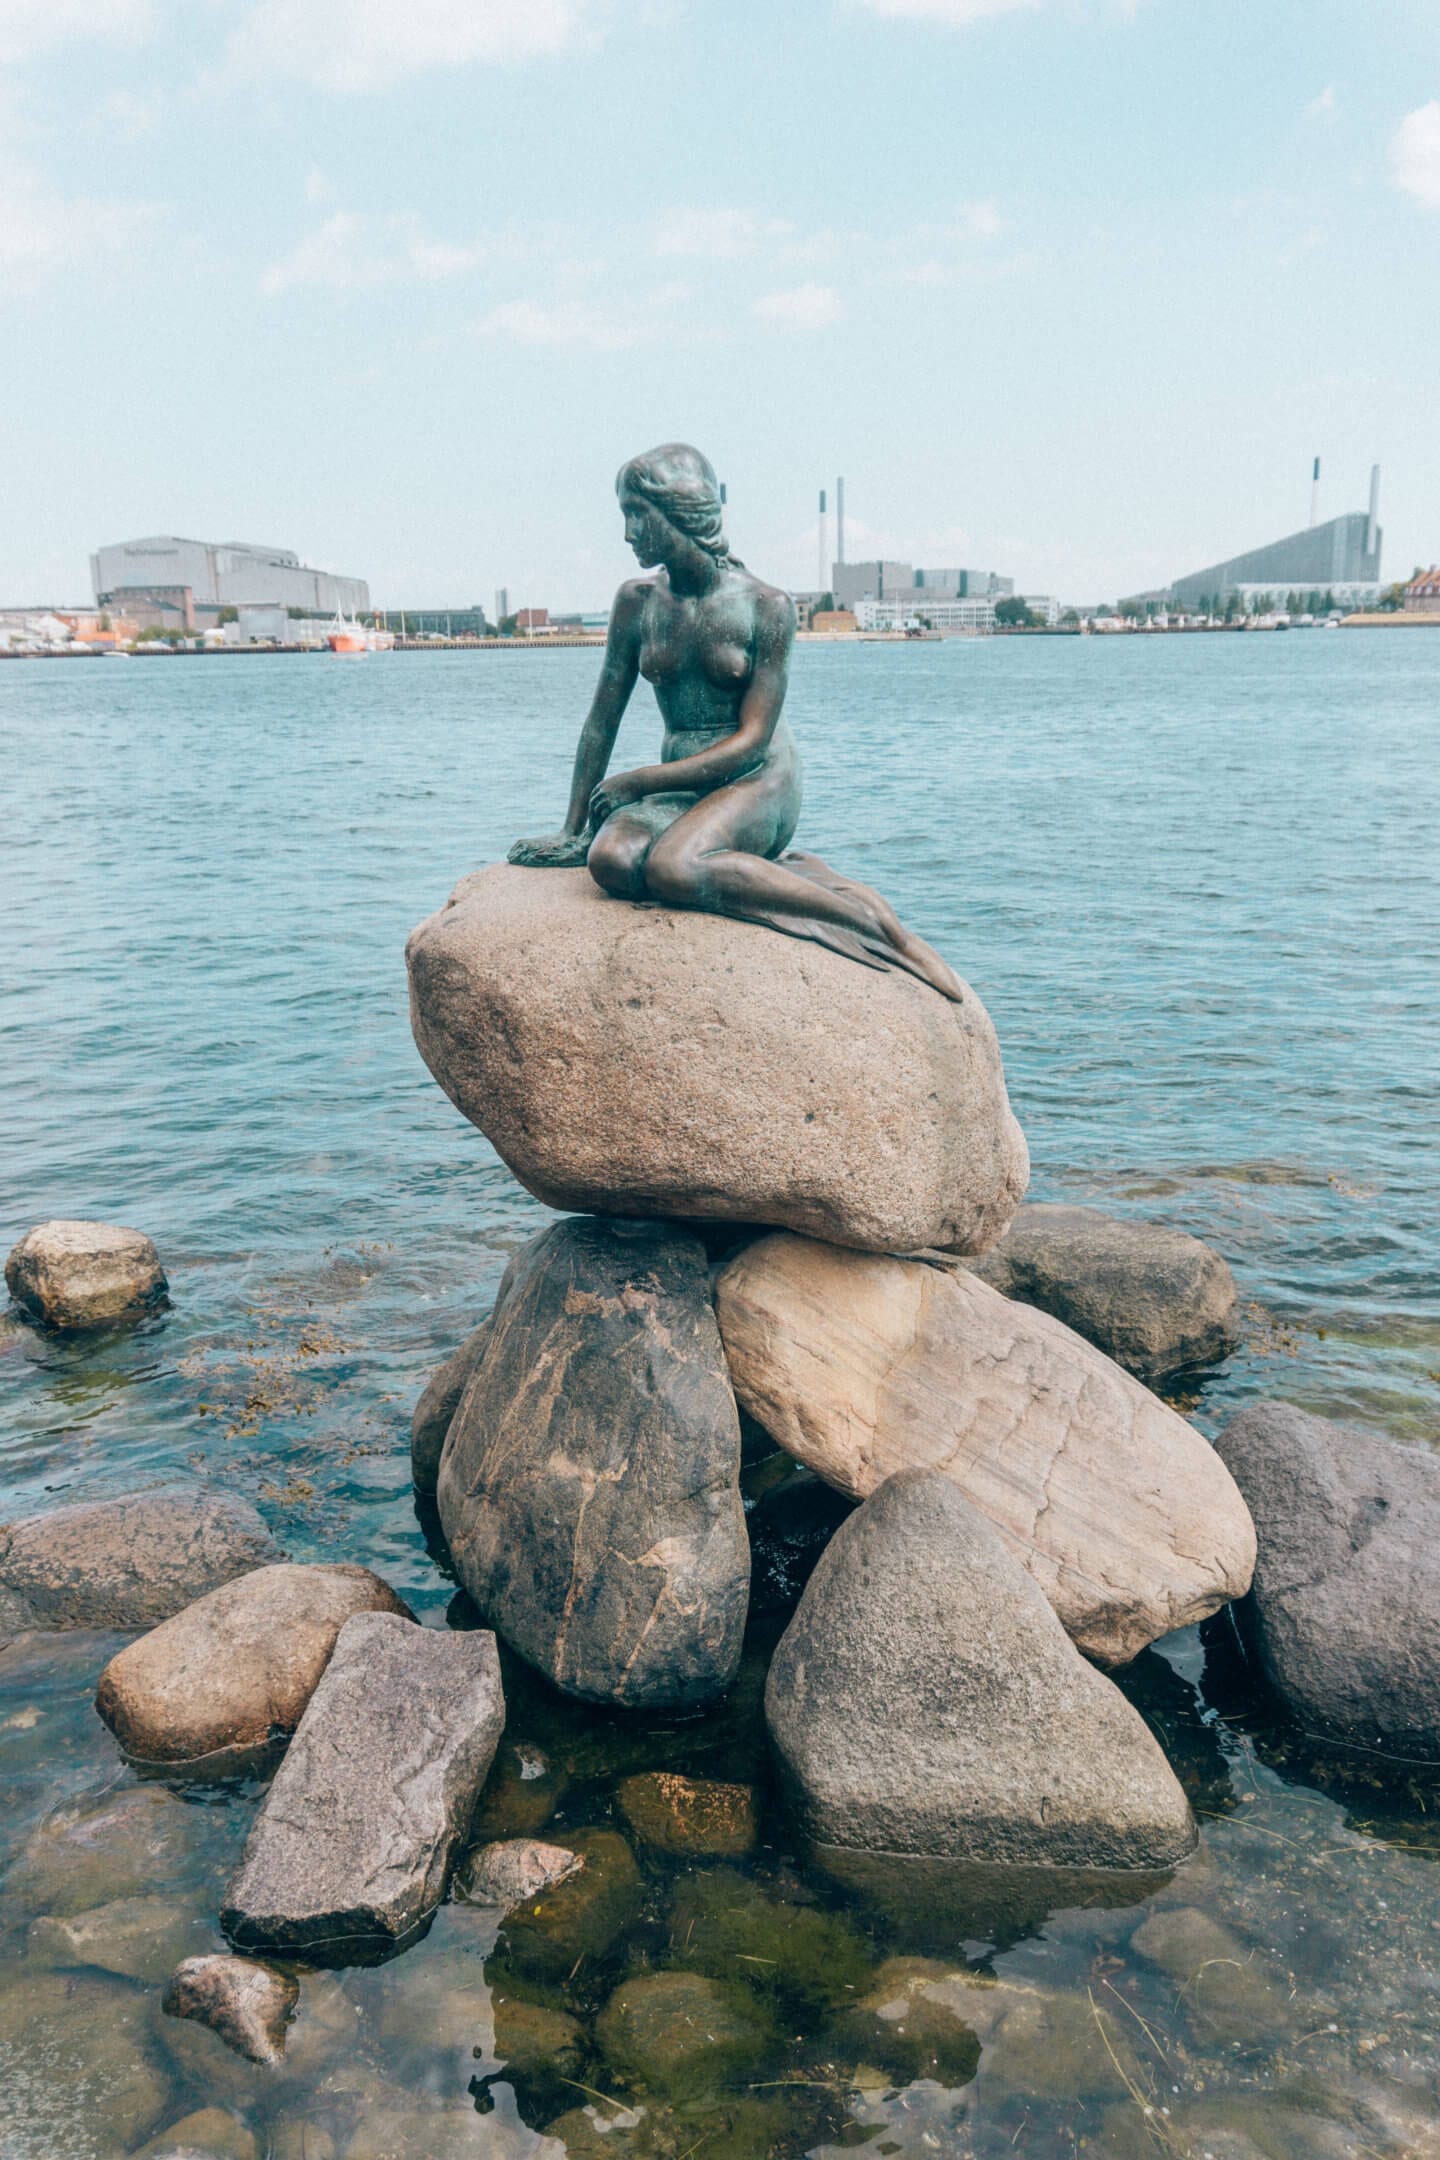 The Little Mermaid Statue on a sunny blue sky day in Copenhagen 